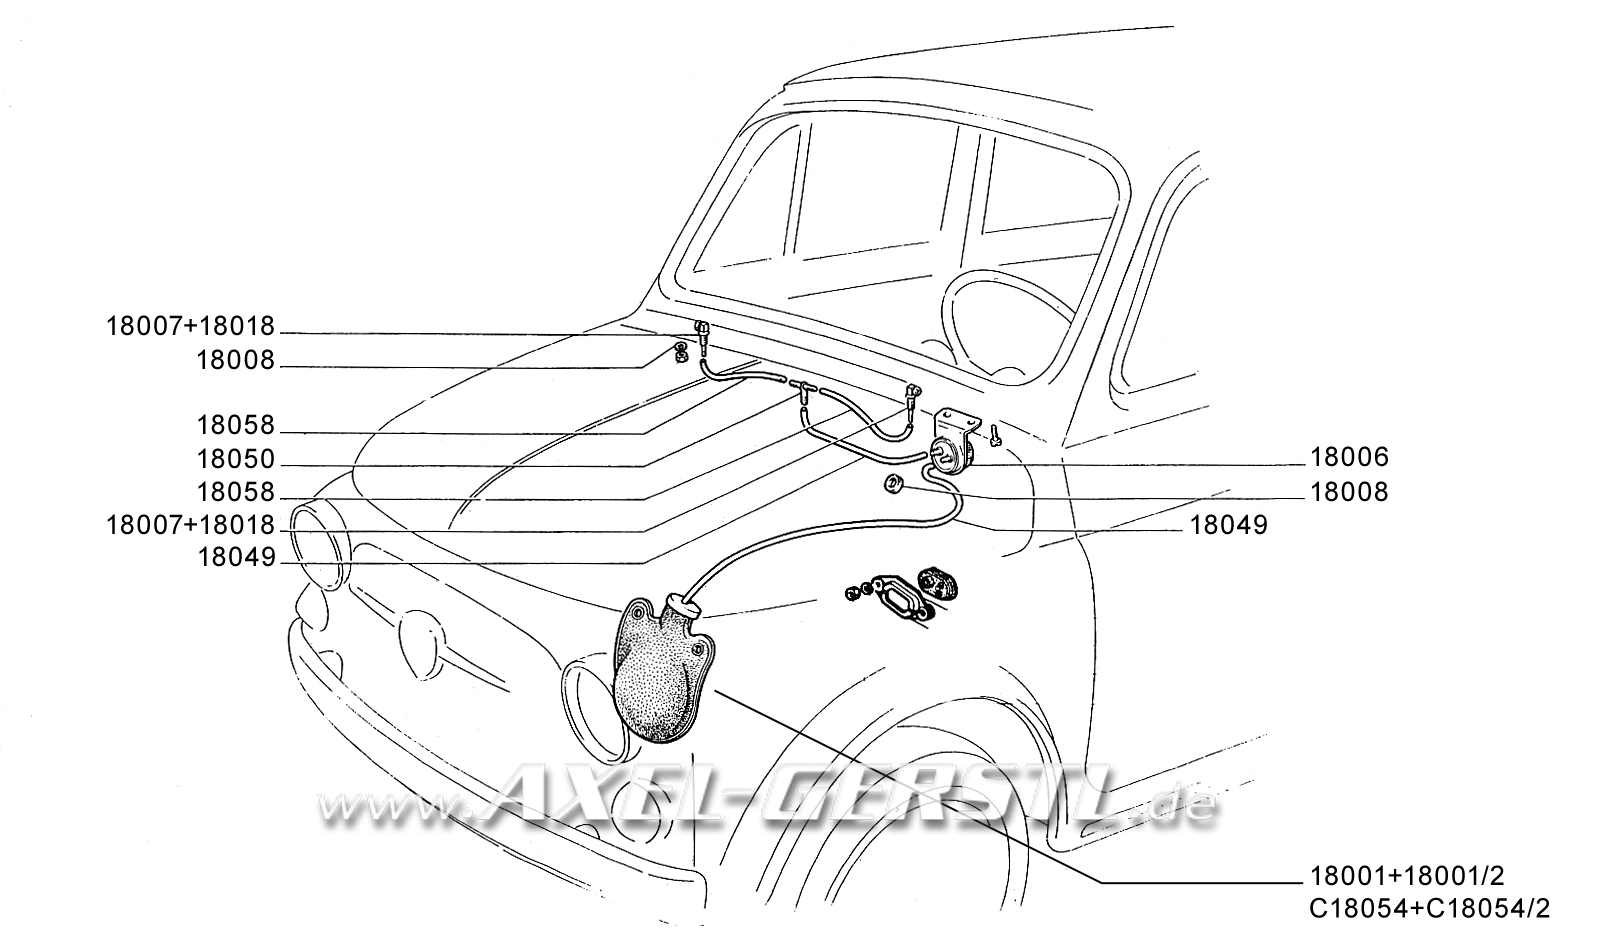 Bremsschlauch hinten, langer Nippel (Gewinde M10 x 1,25) Fiat 500